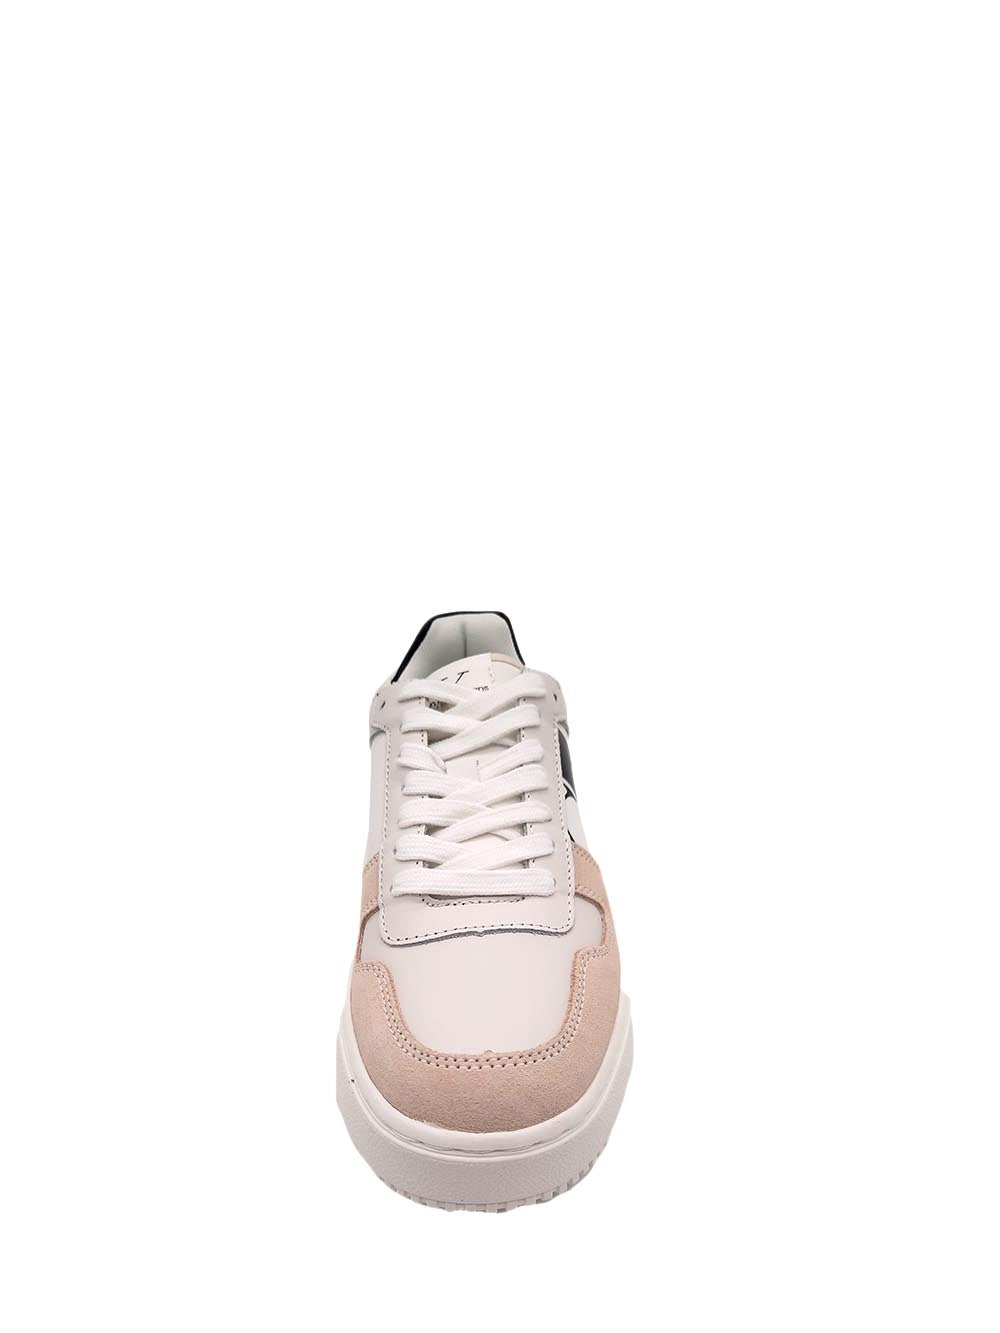 Calvin Klein Sneakers Donna Bianco/nero